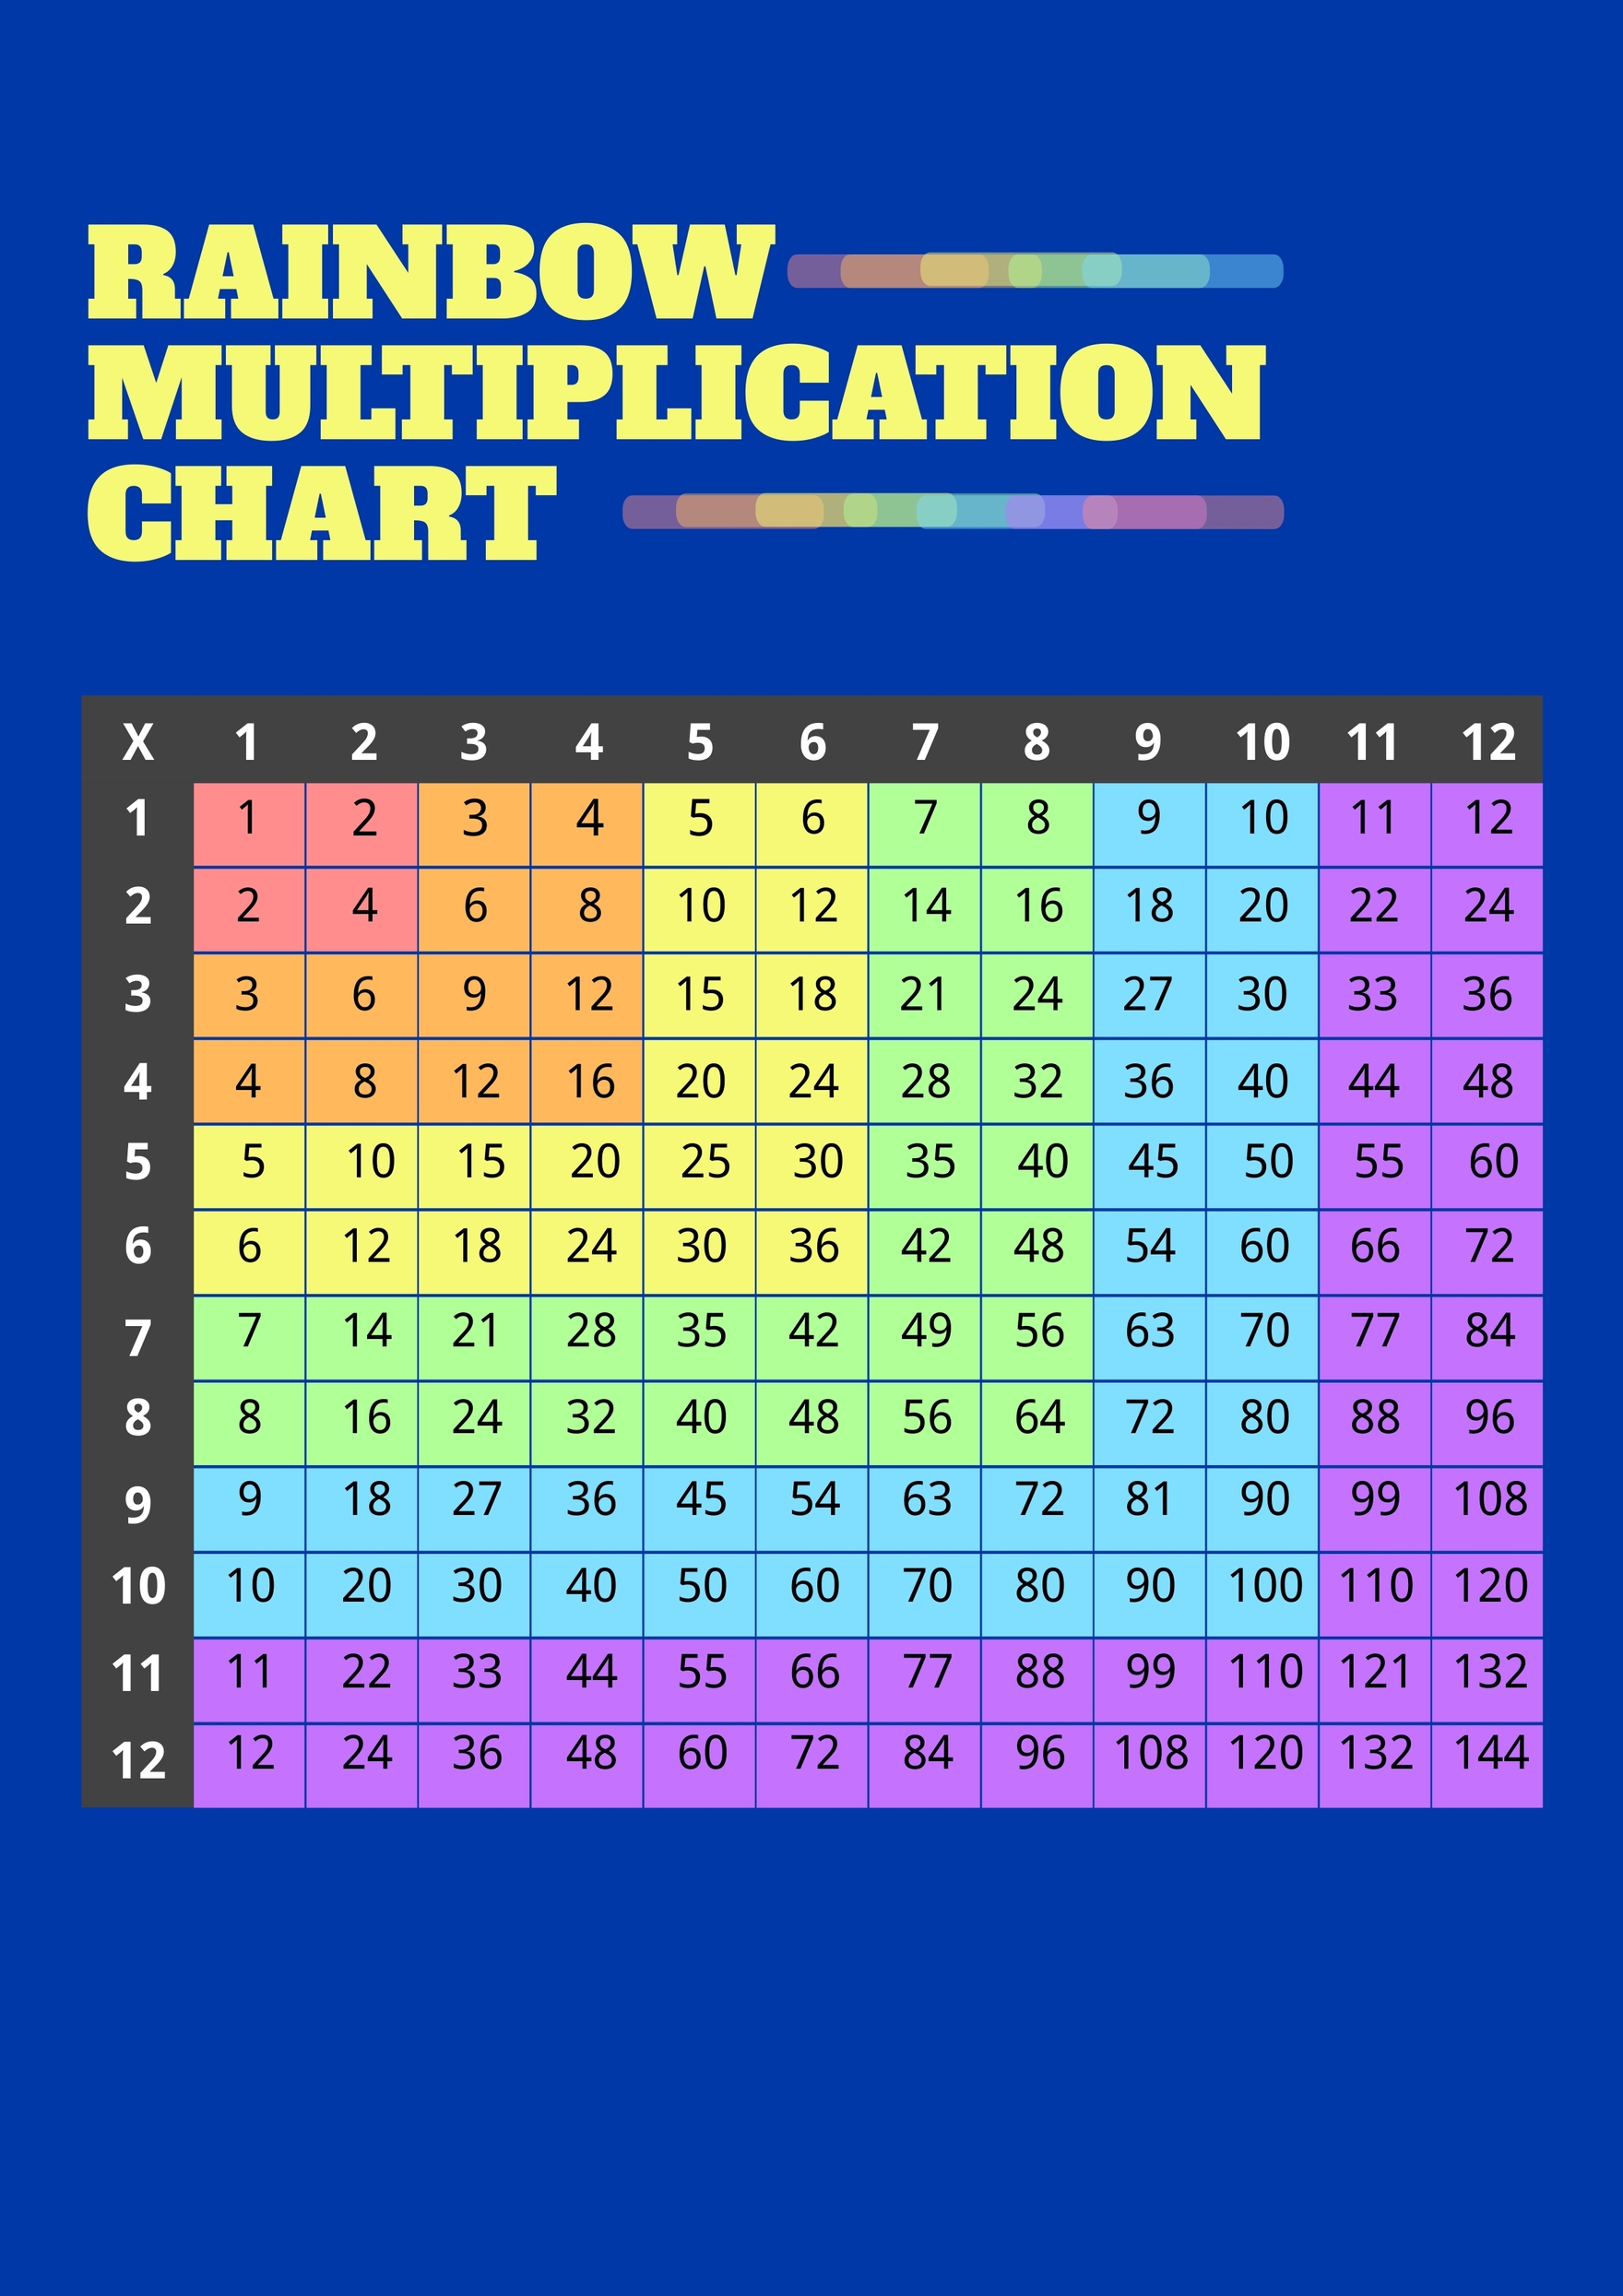 Rainbow Multiplication Chart Template In Illustrator PDF Download 